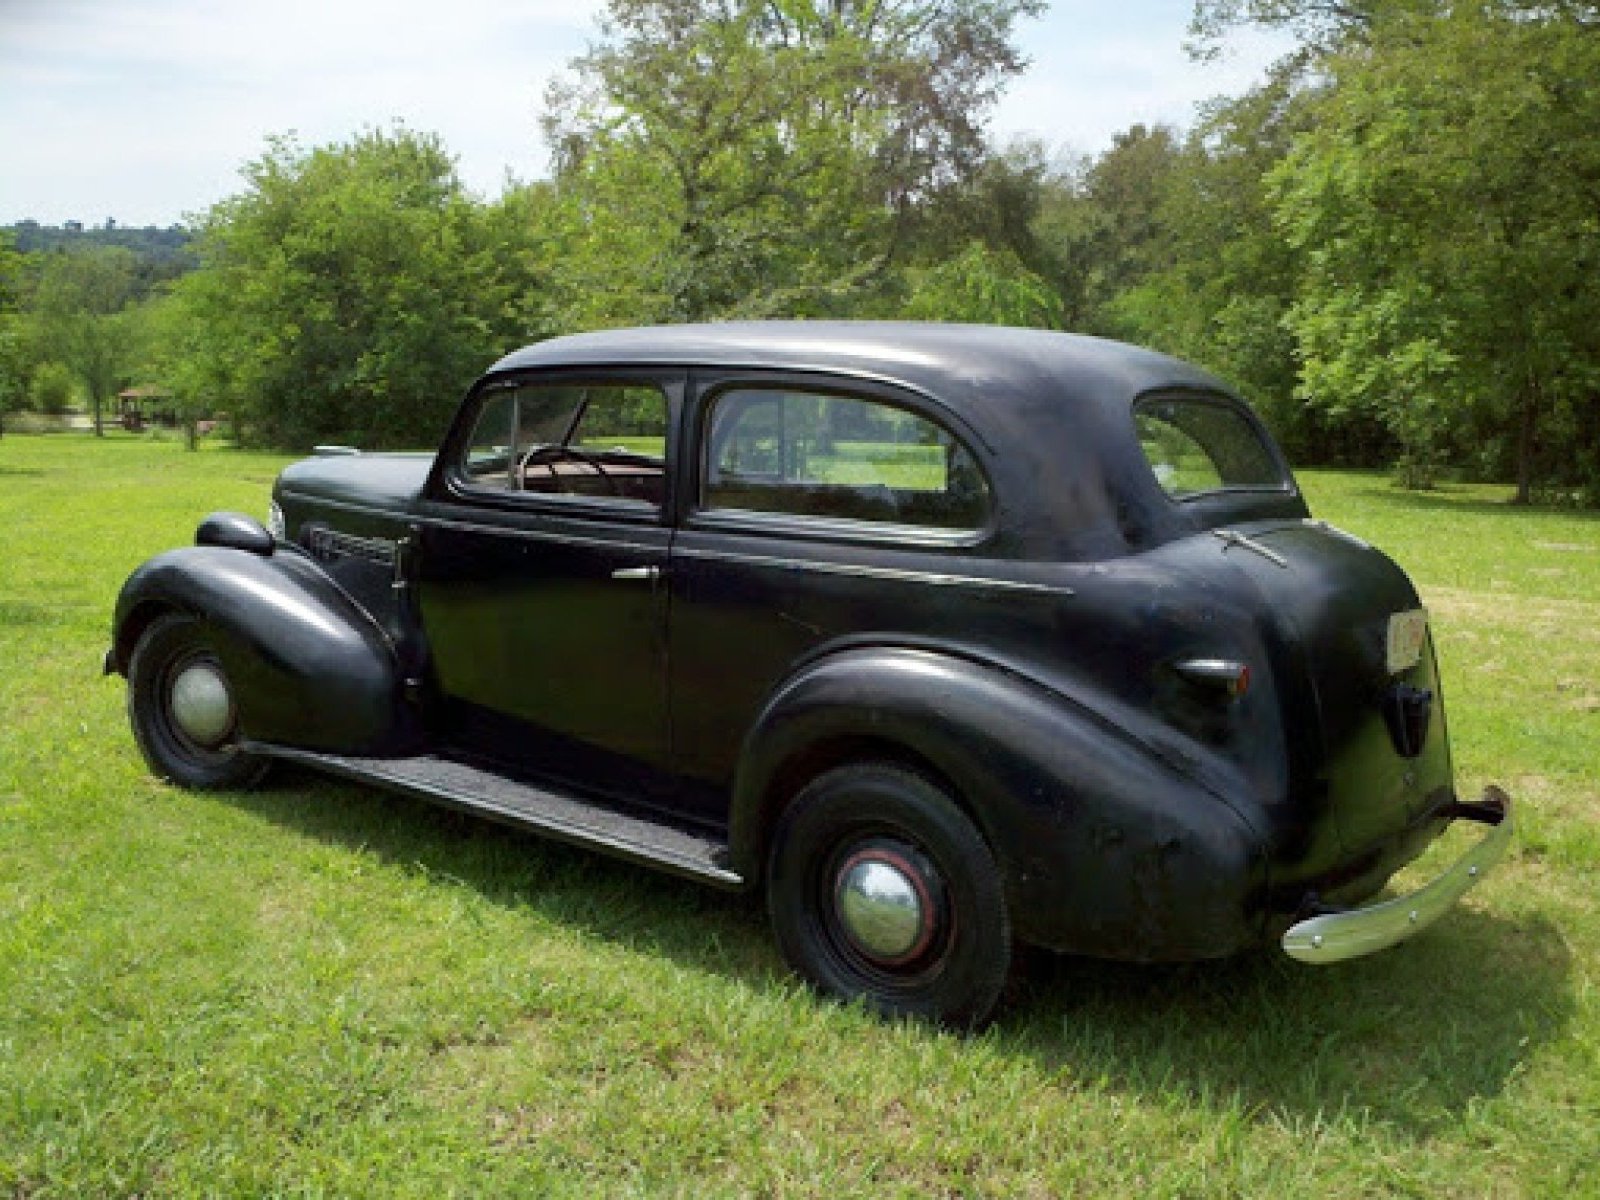 1939 Chevrolet Sedan